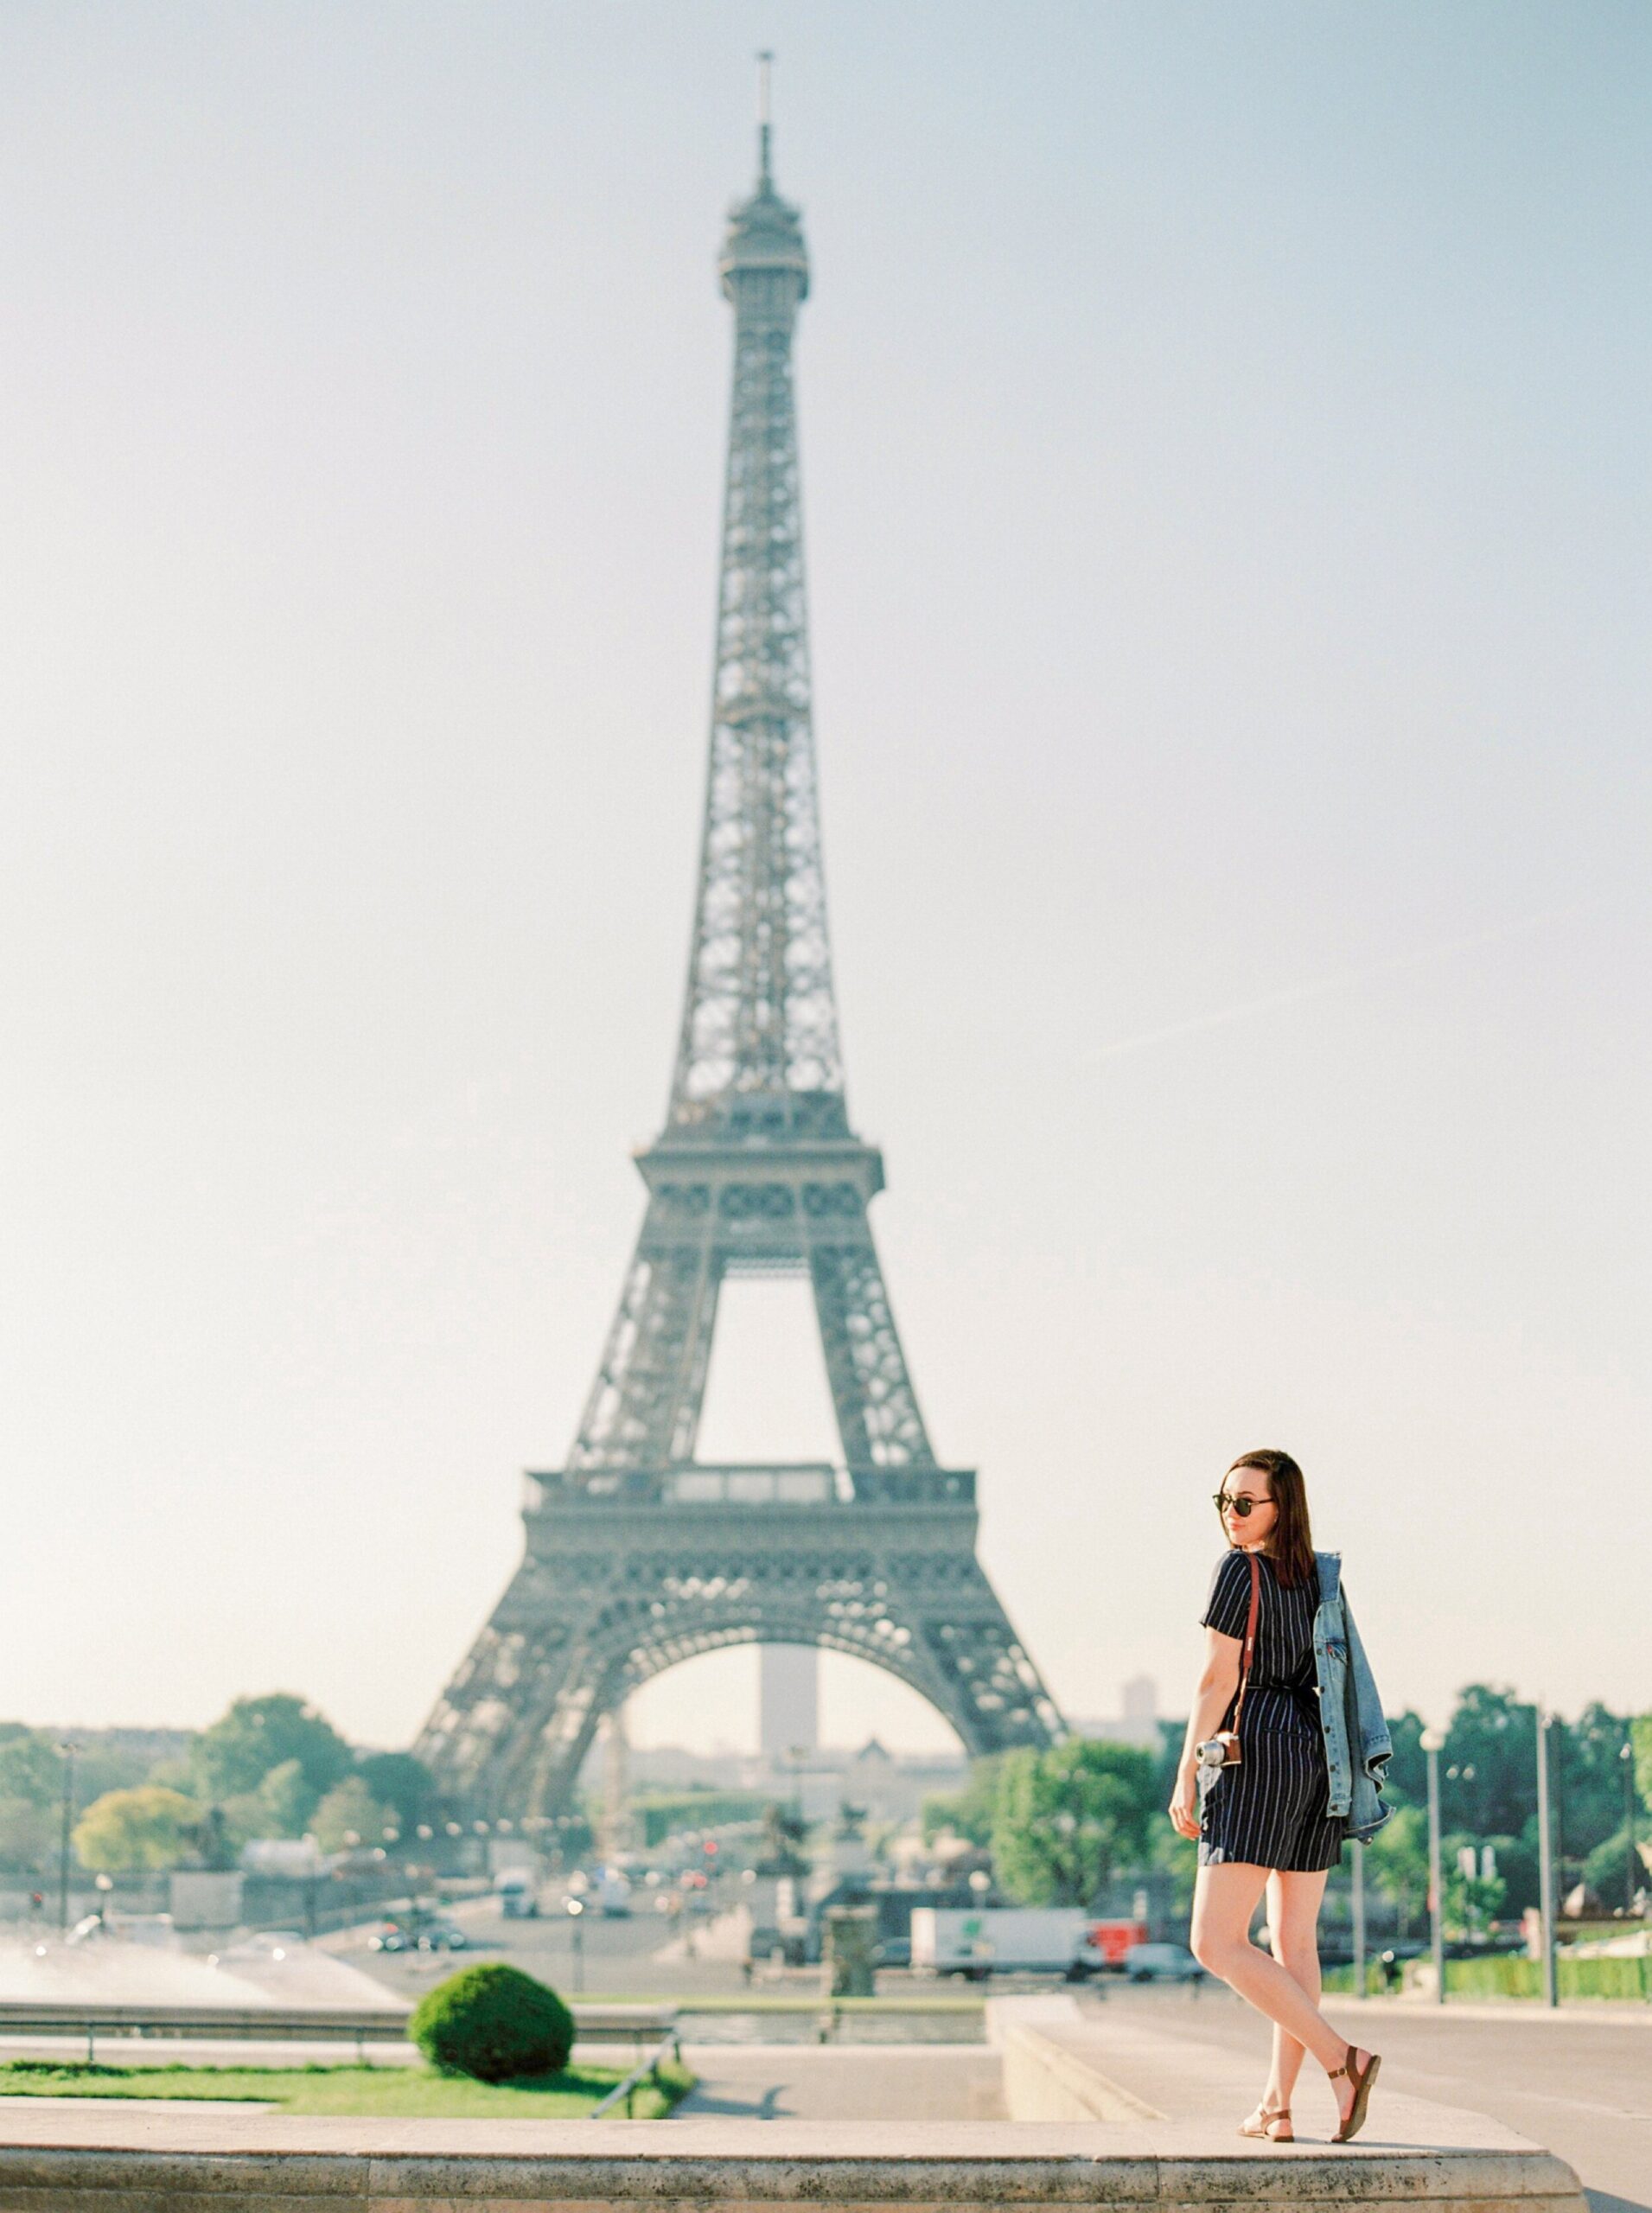  Paris travel photos shot on film | medium format contax 645 film photographer 